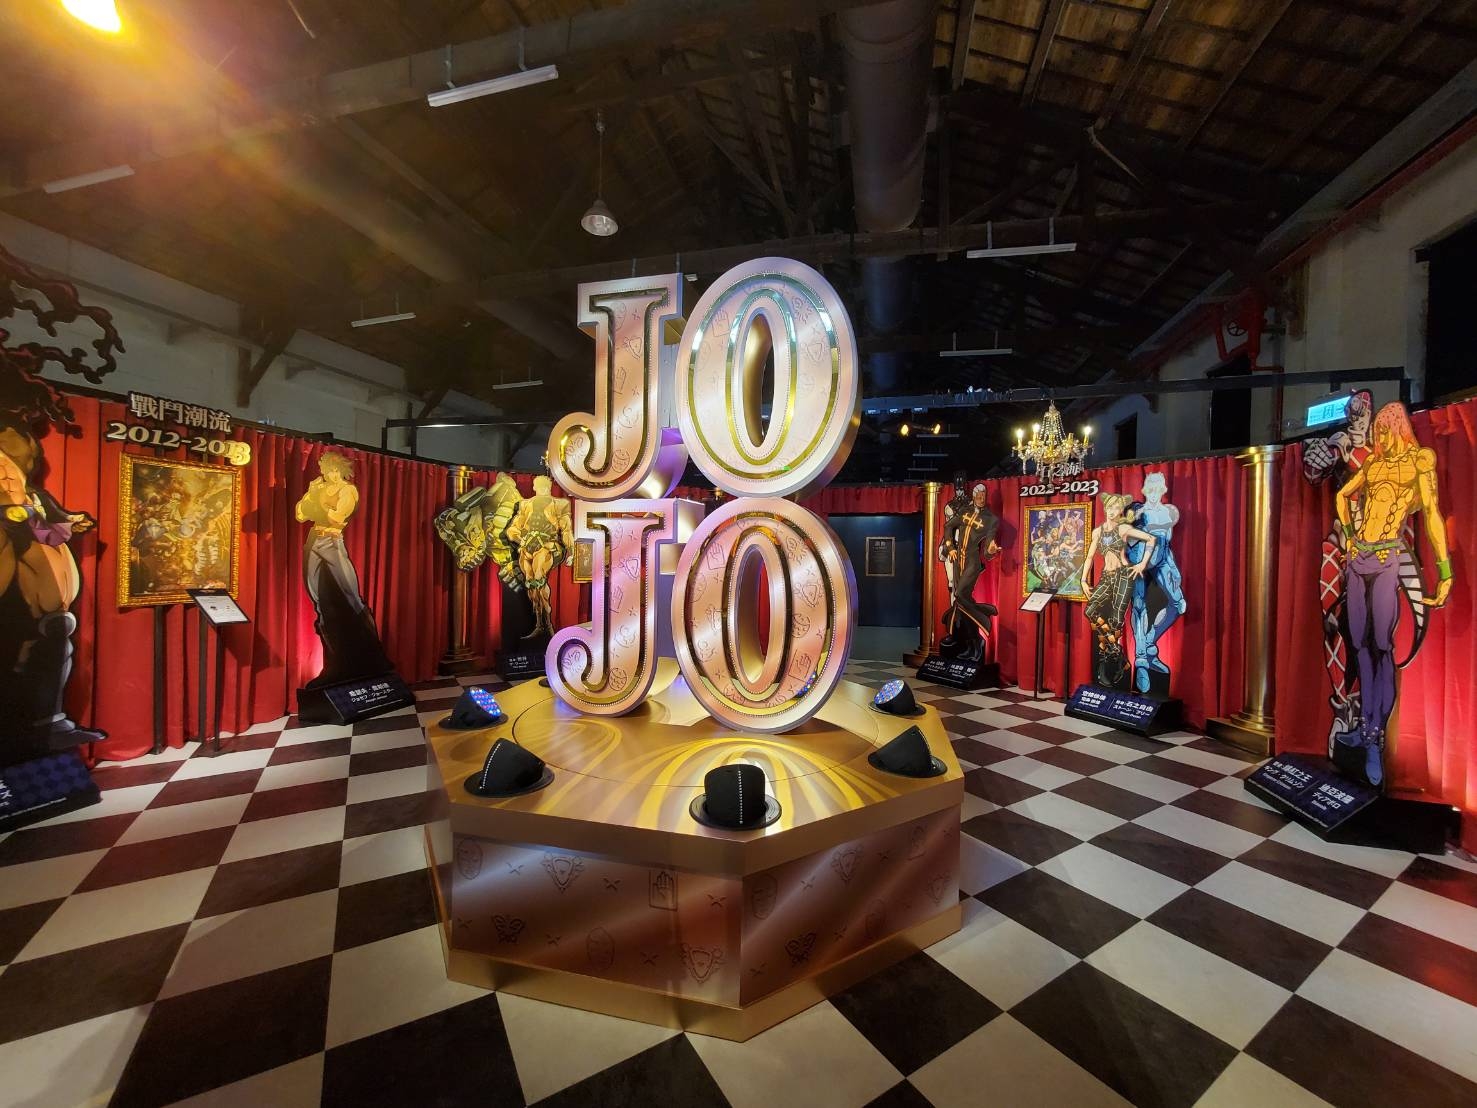 《JoJo 的奇妙冒險》動畫 10 週年特展 4 大重點搶先看，經典戰鬥場景、徐倫等身雕像必打卡！